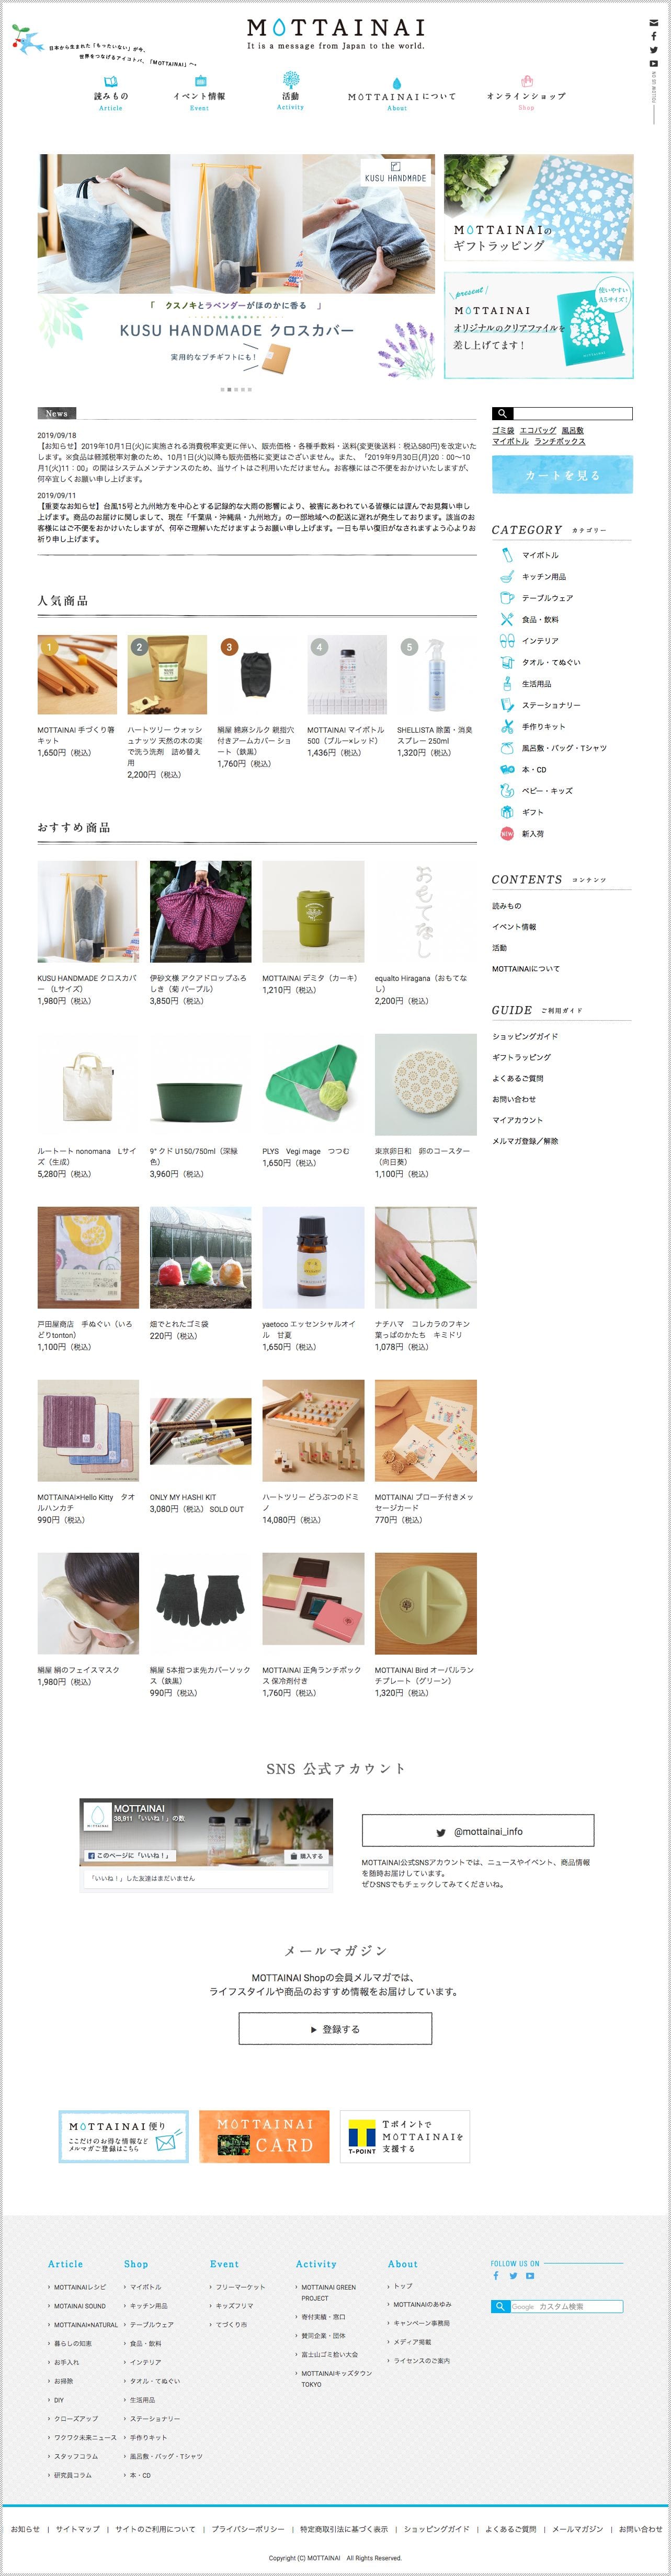 MOTTAINAI Shop【公式通販】のスクリーンショット - トップページ